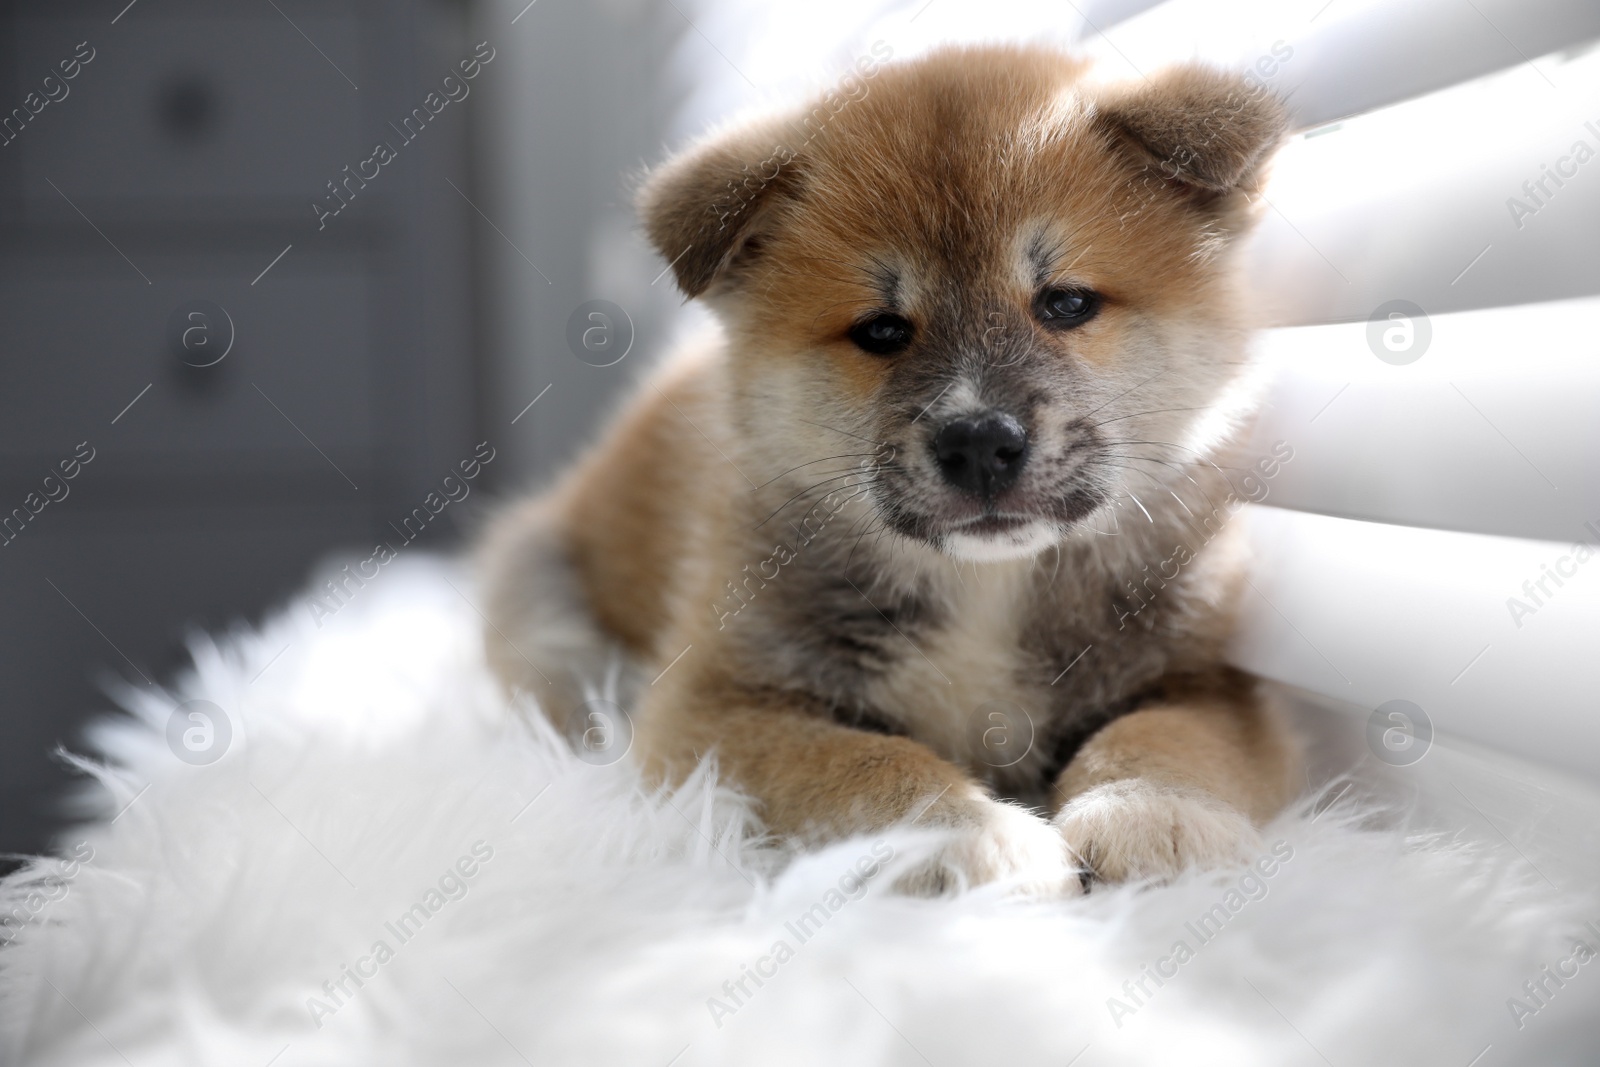 Photo of Cute Akita Inu puppy on fuzzy rug near window indoors